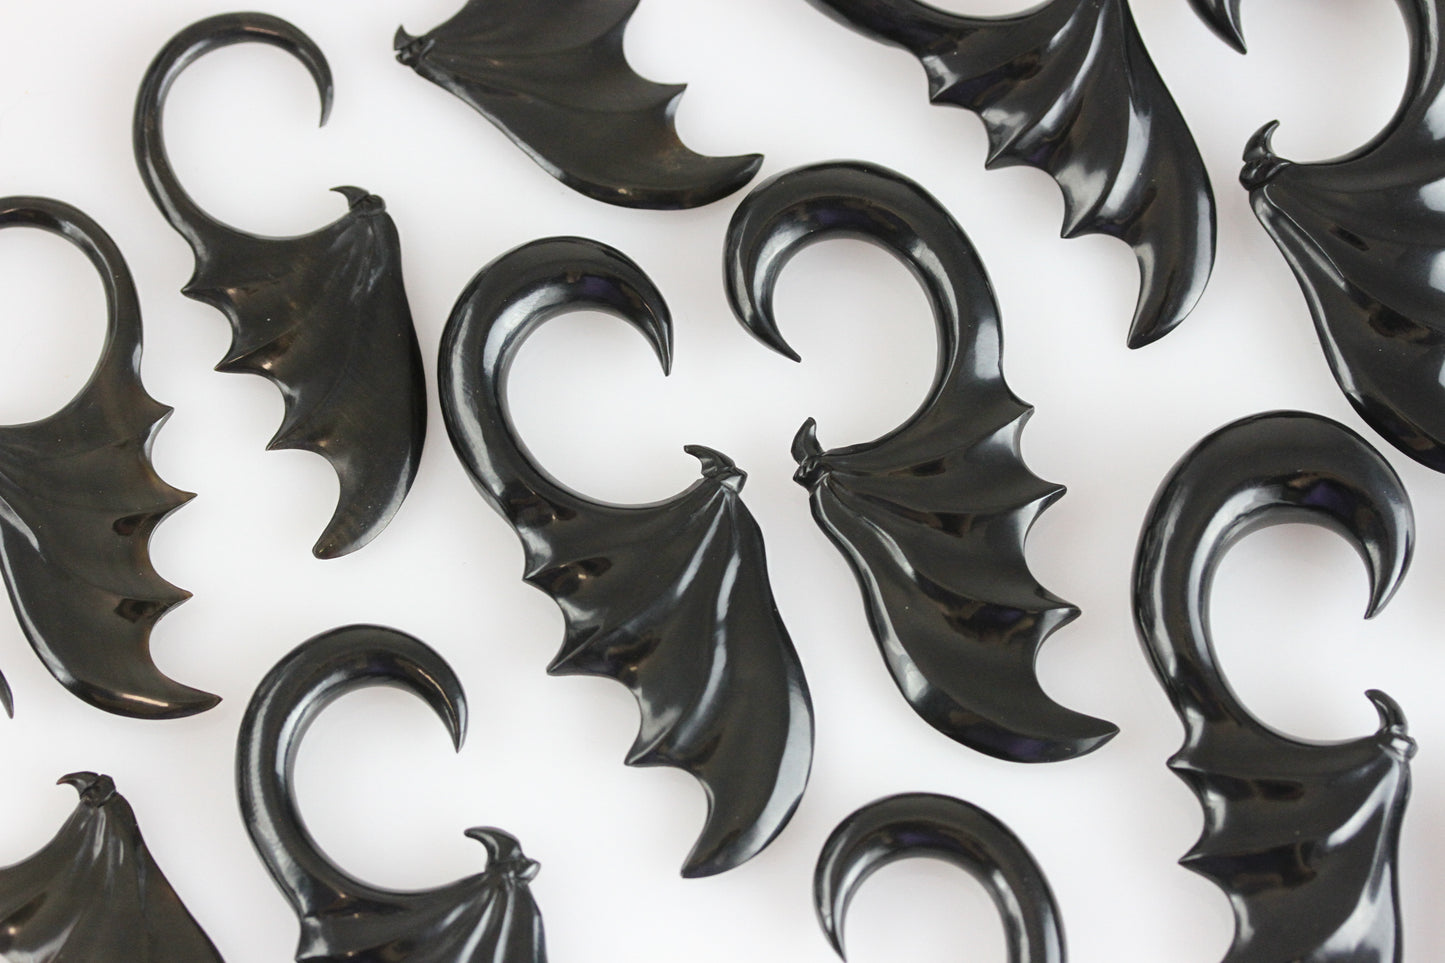 Bat wing plug hangers